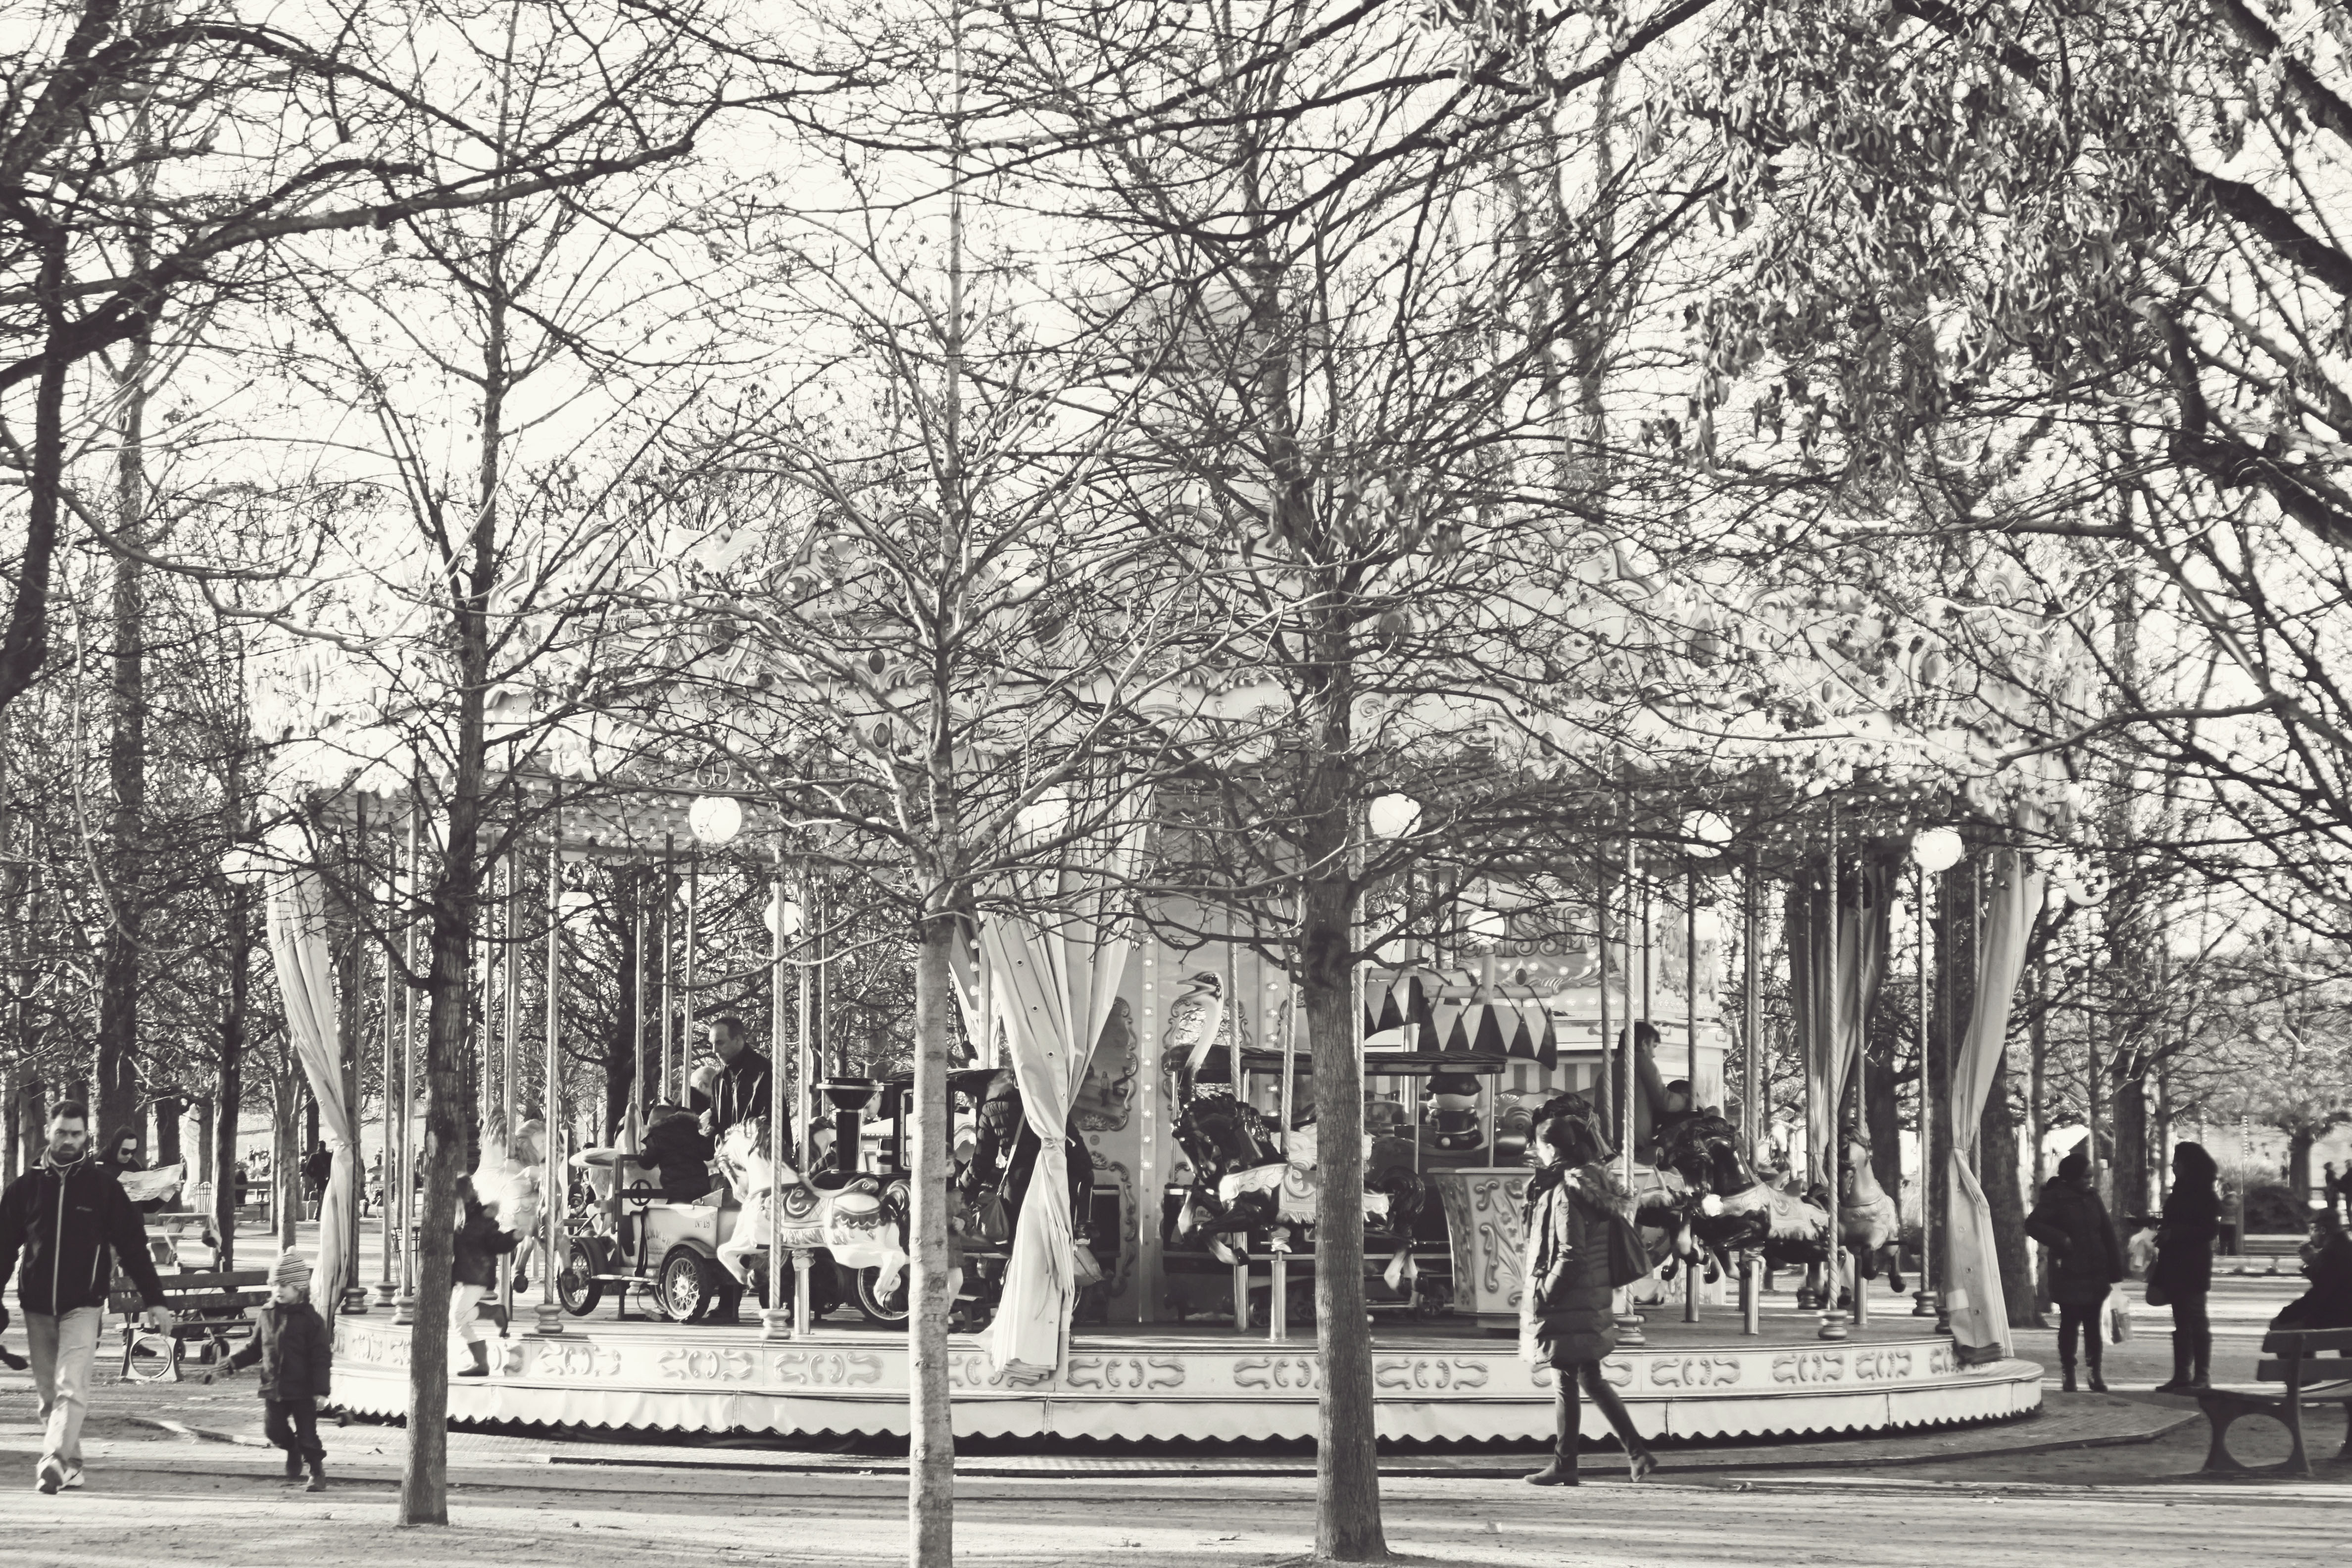 Carousel at the Graffiti at the Tuilerie Gardens in Paris